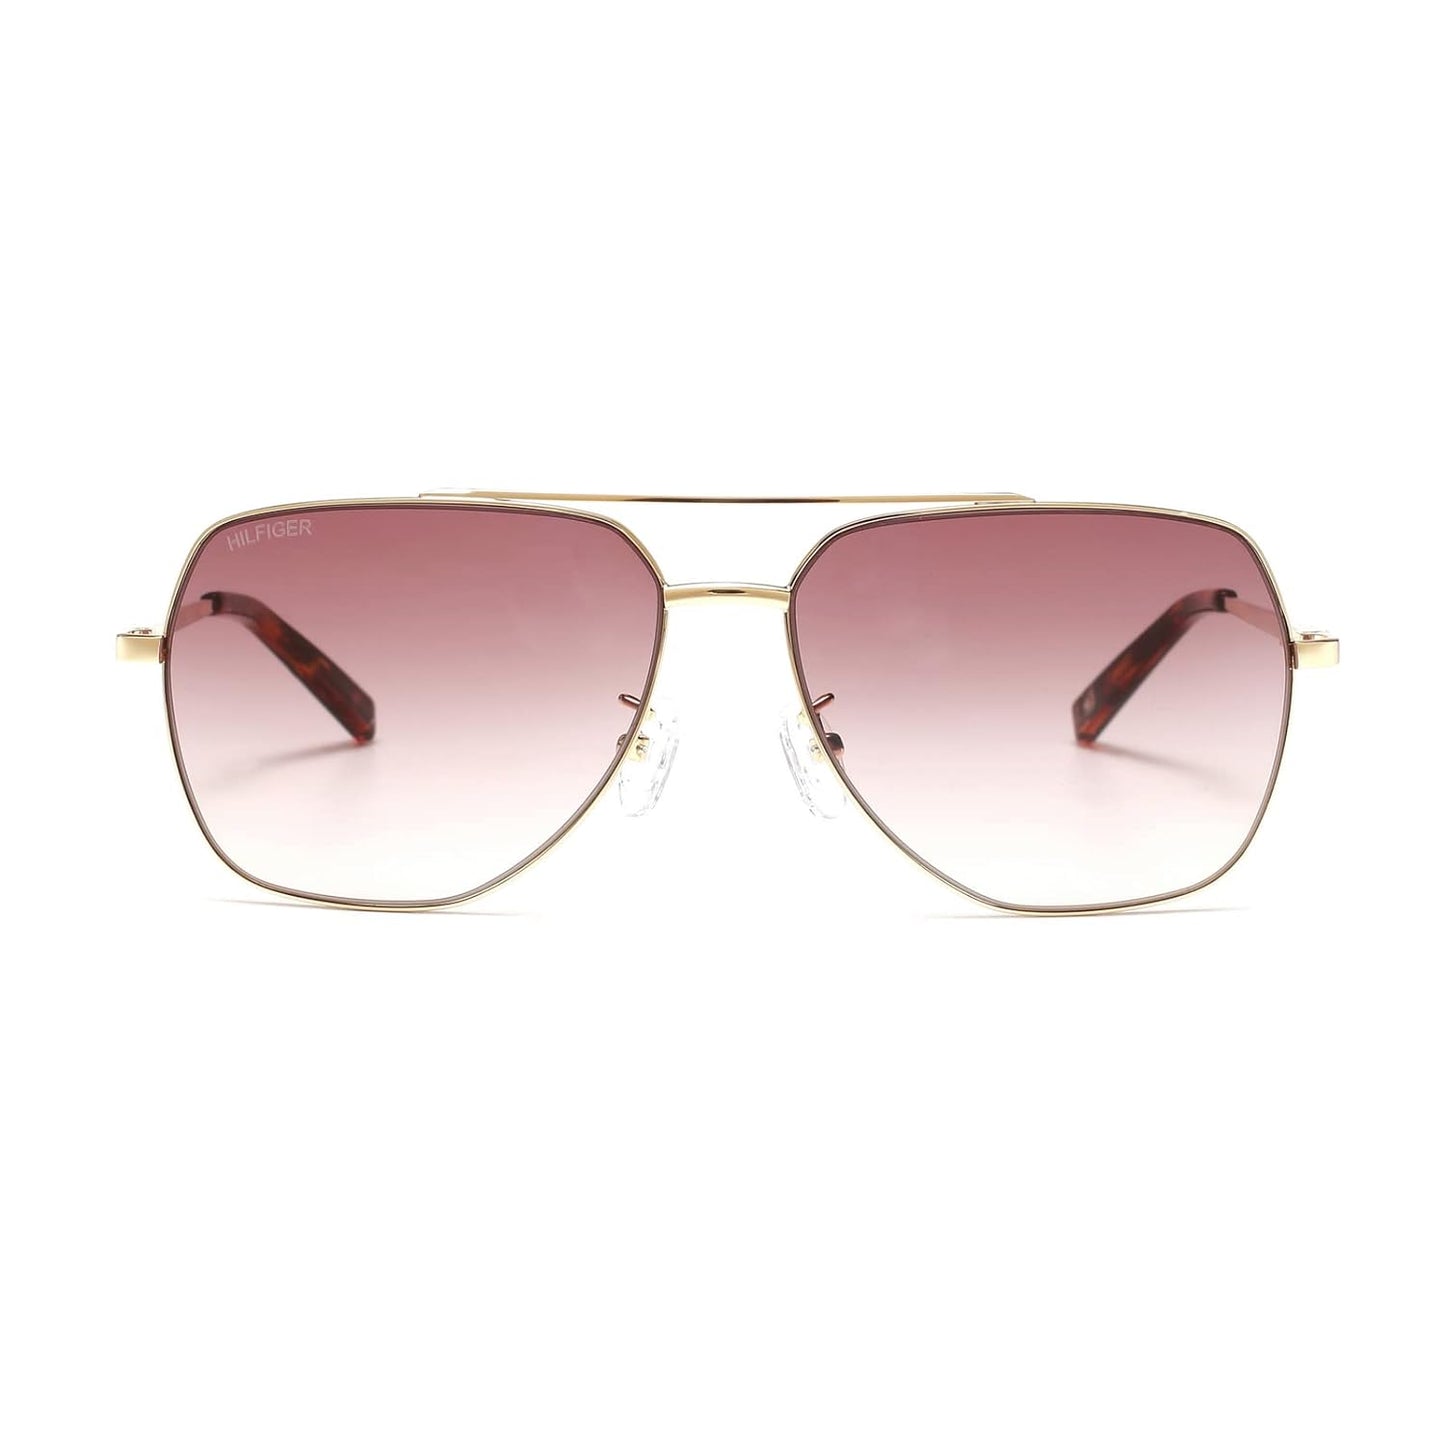 Tommy Hilfiger Men's Brown Sunglasses